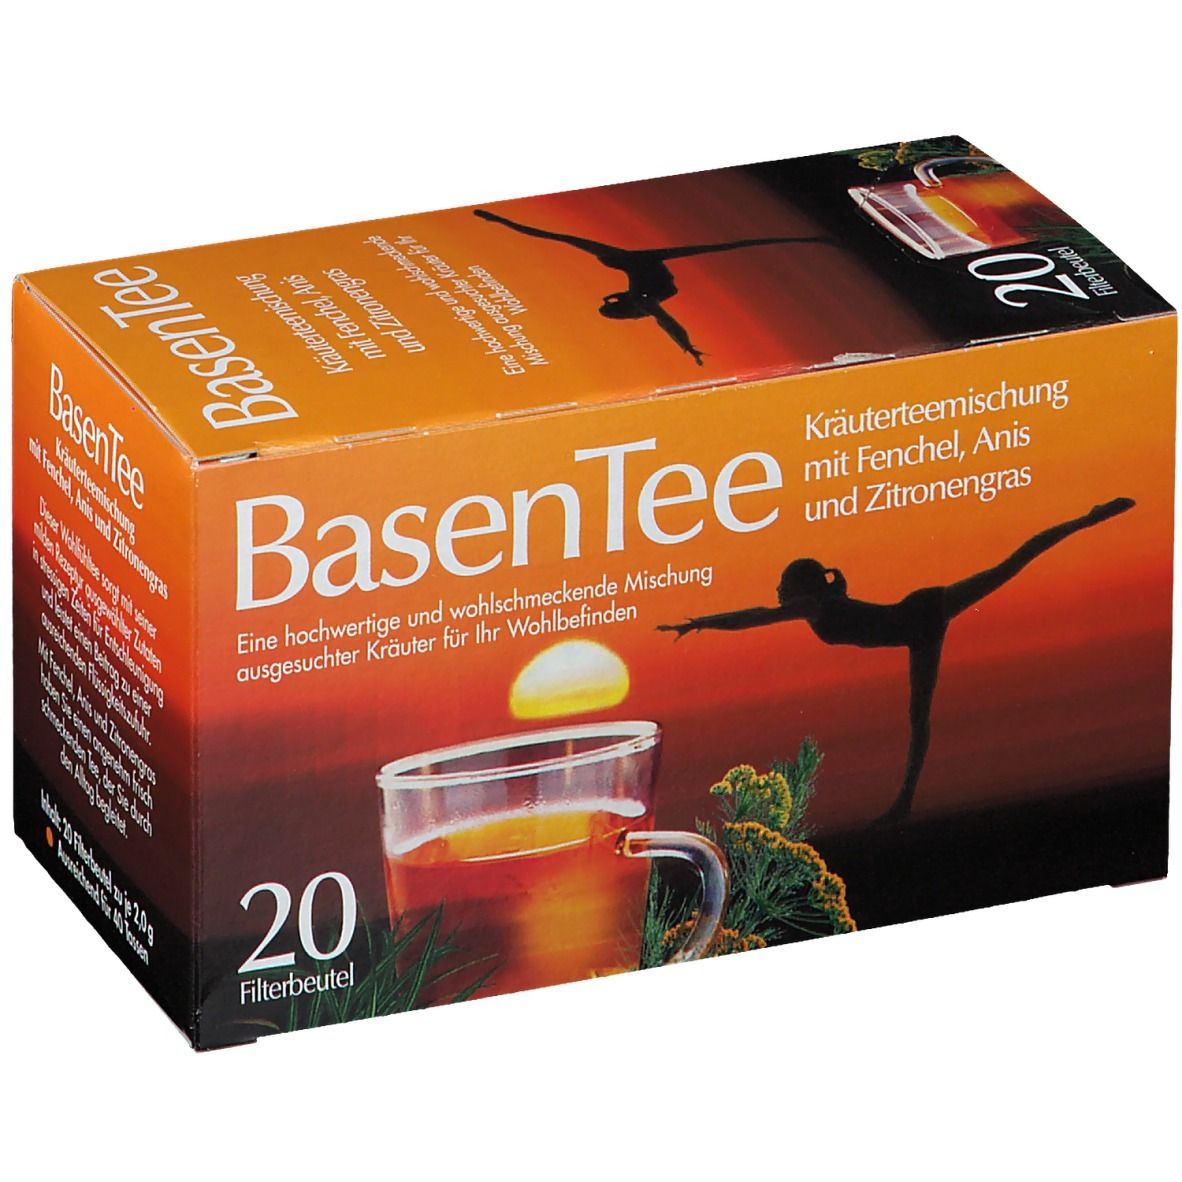 Image of Basentee Filterbeutel